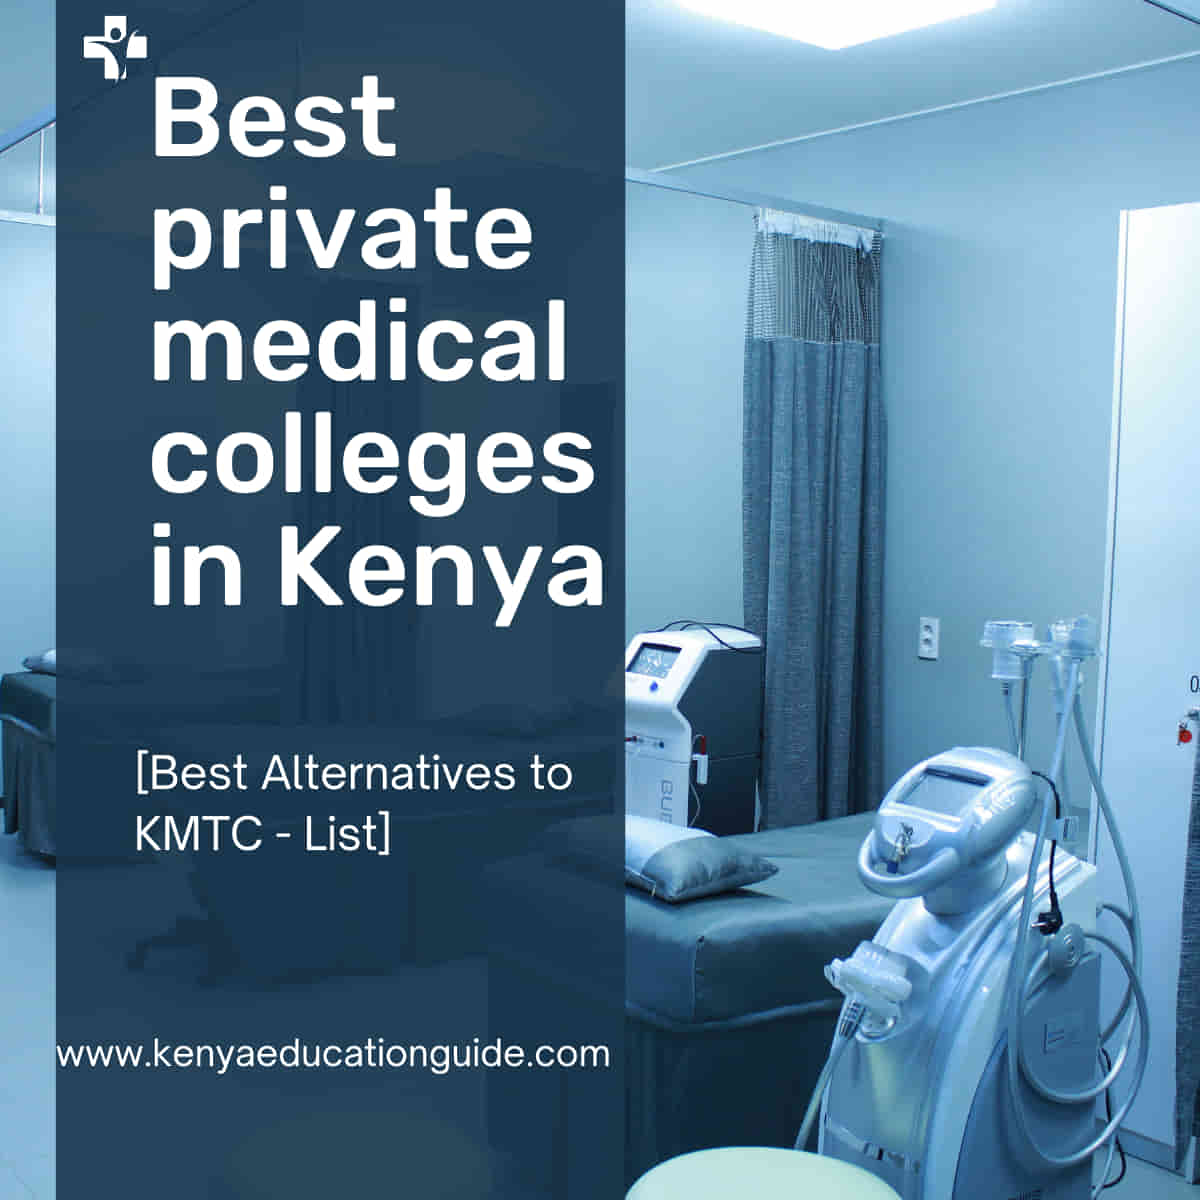 Best private medical colleges in Kenya